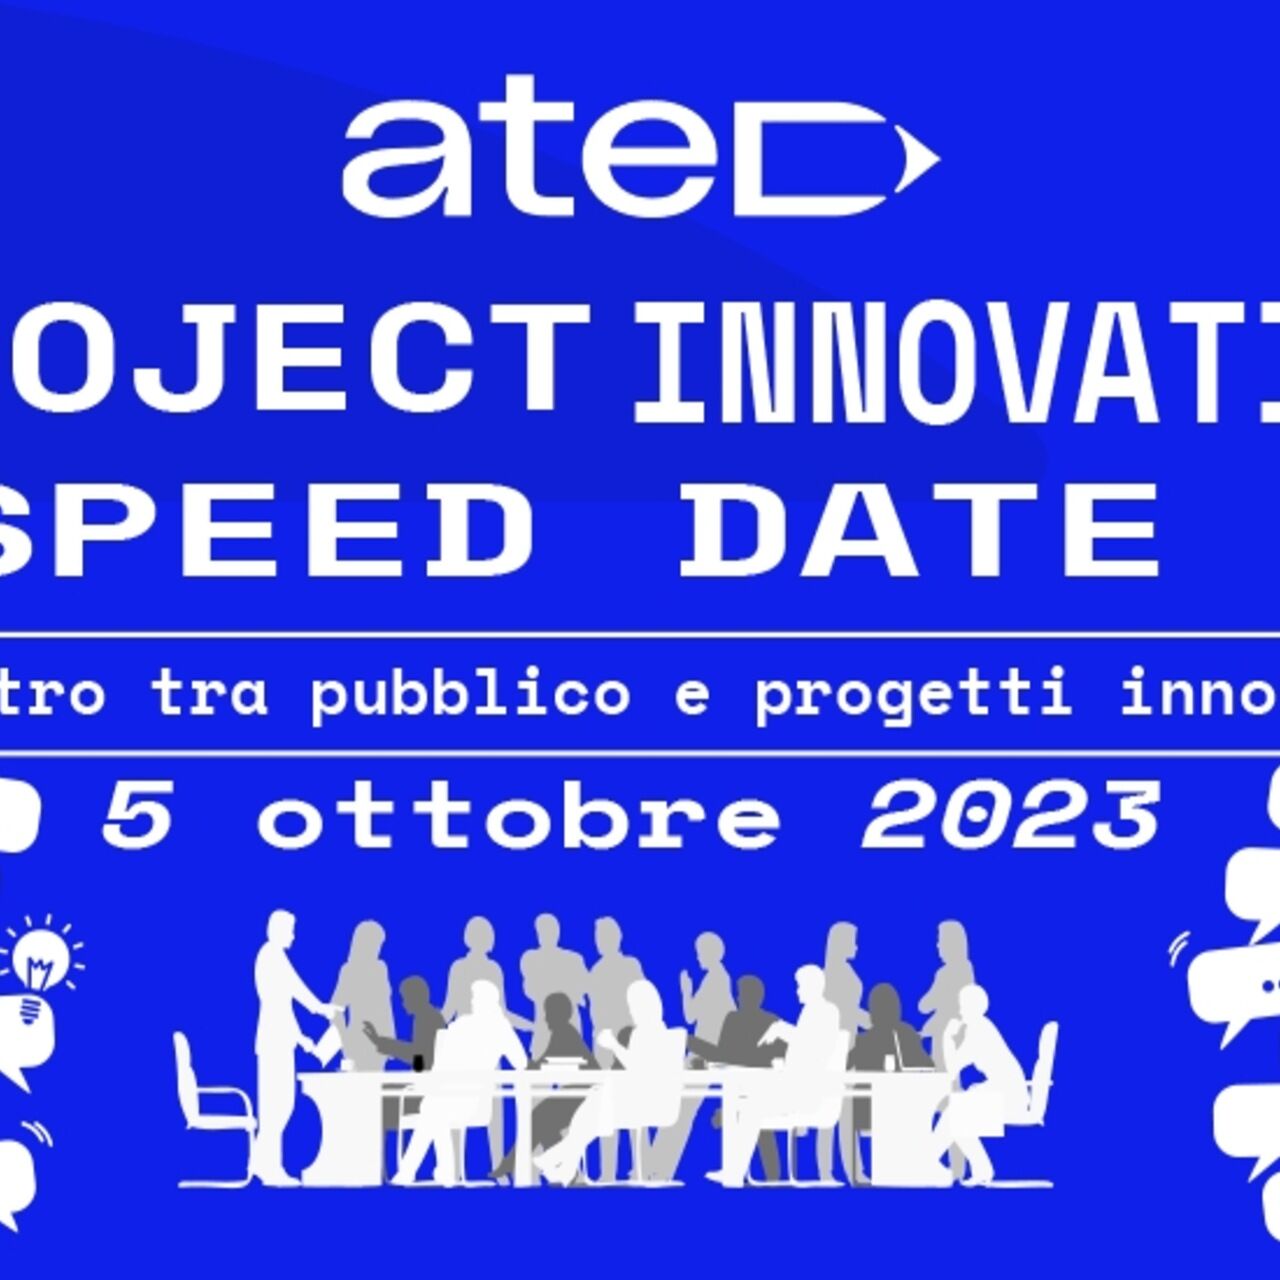 ATED Project Innovation Speed ​​Date: poster i ključni vizual